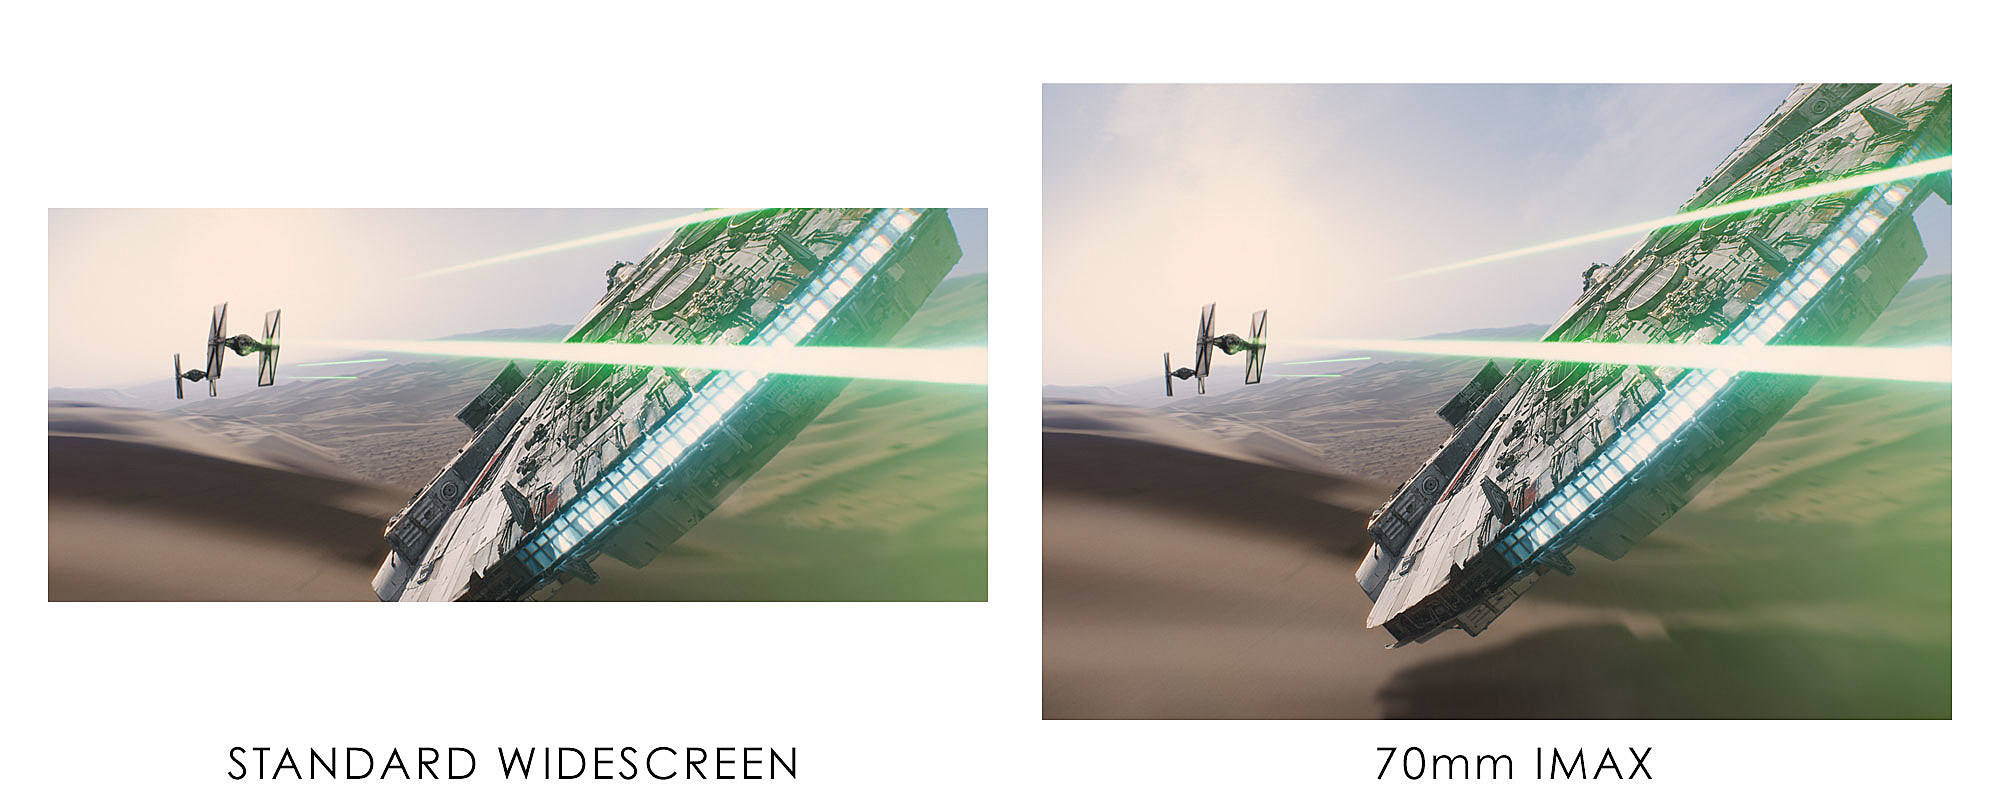 http://screencrush.com/442/files/2015/10/star-wars-force-awakens-imax-comparison-pic.jpg